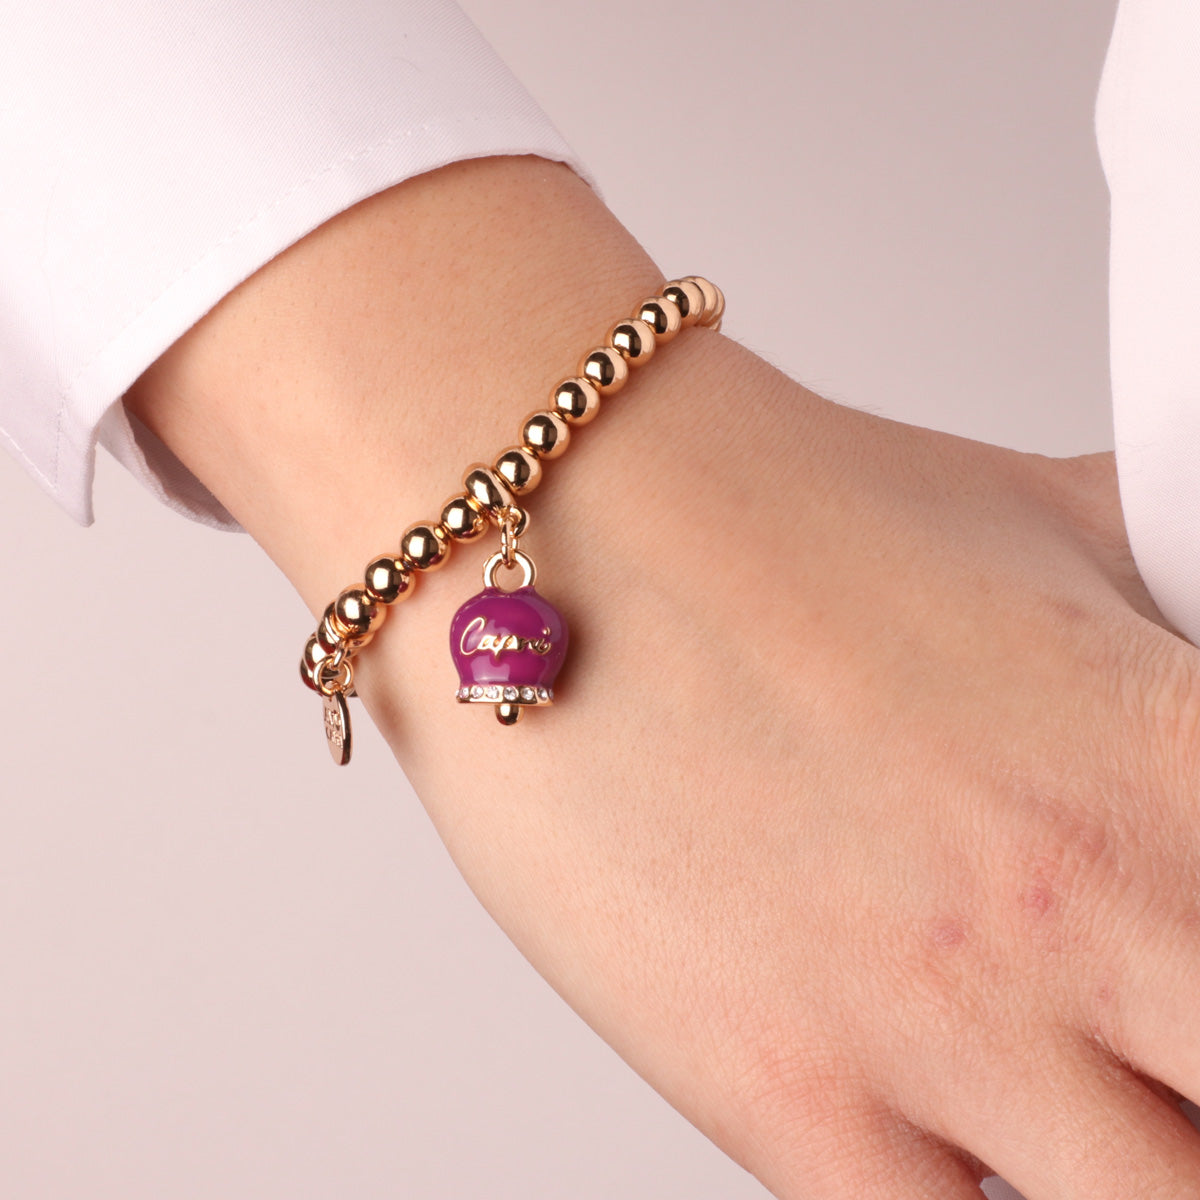 Metal bracelet with bell pendant purple with capri writing